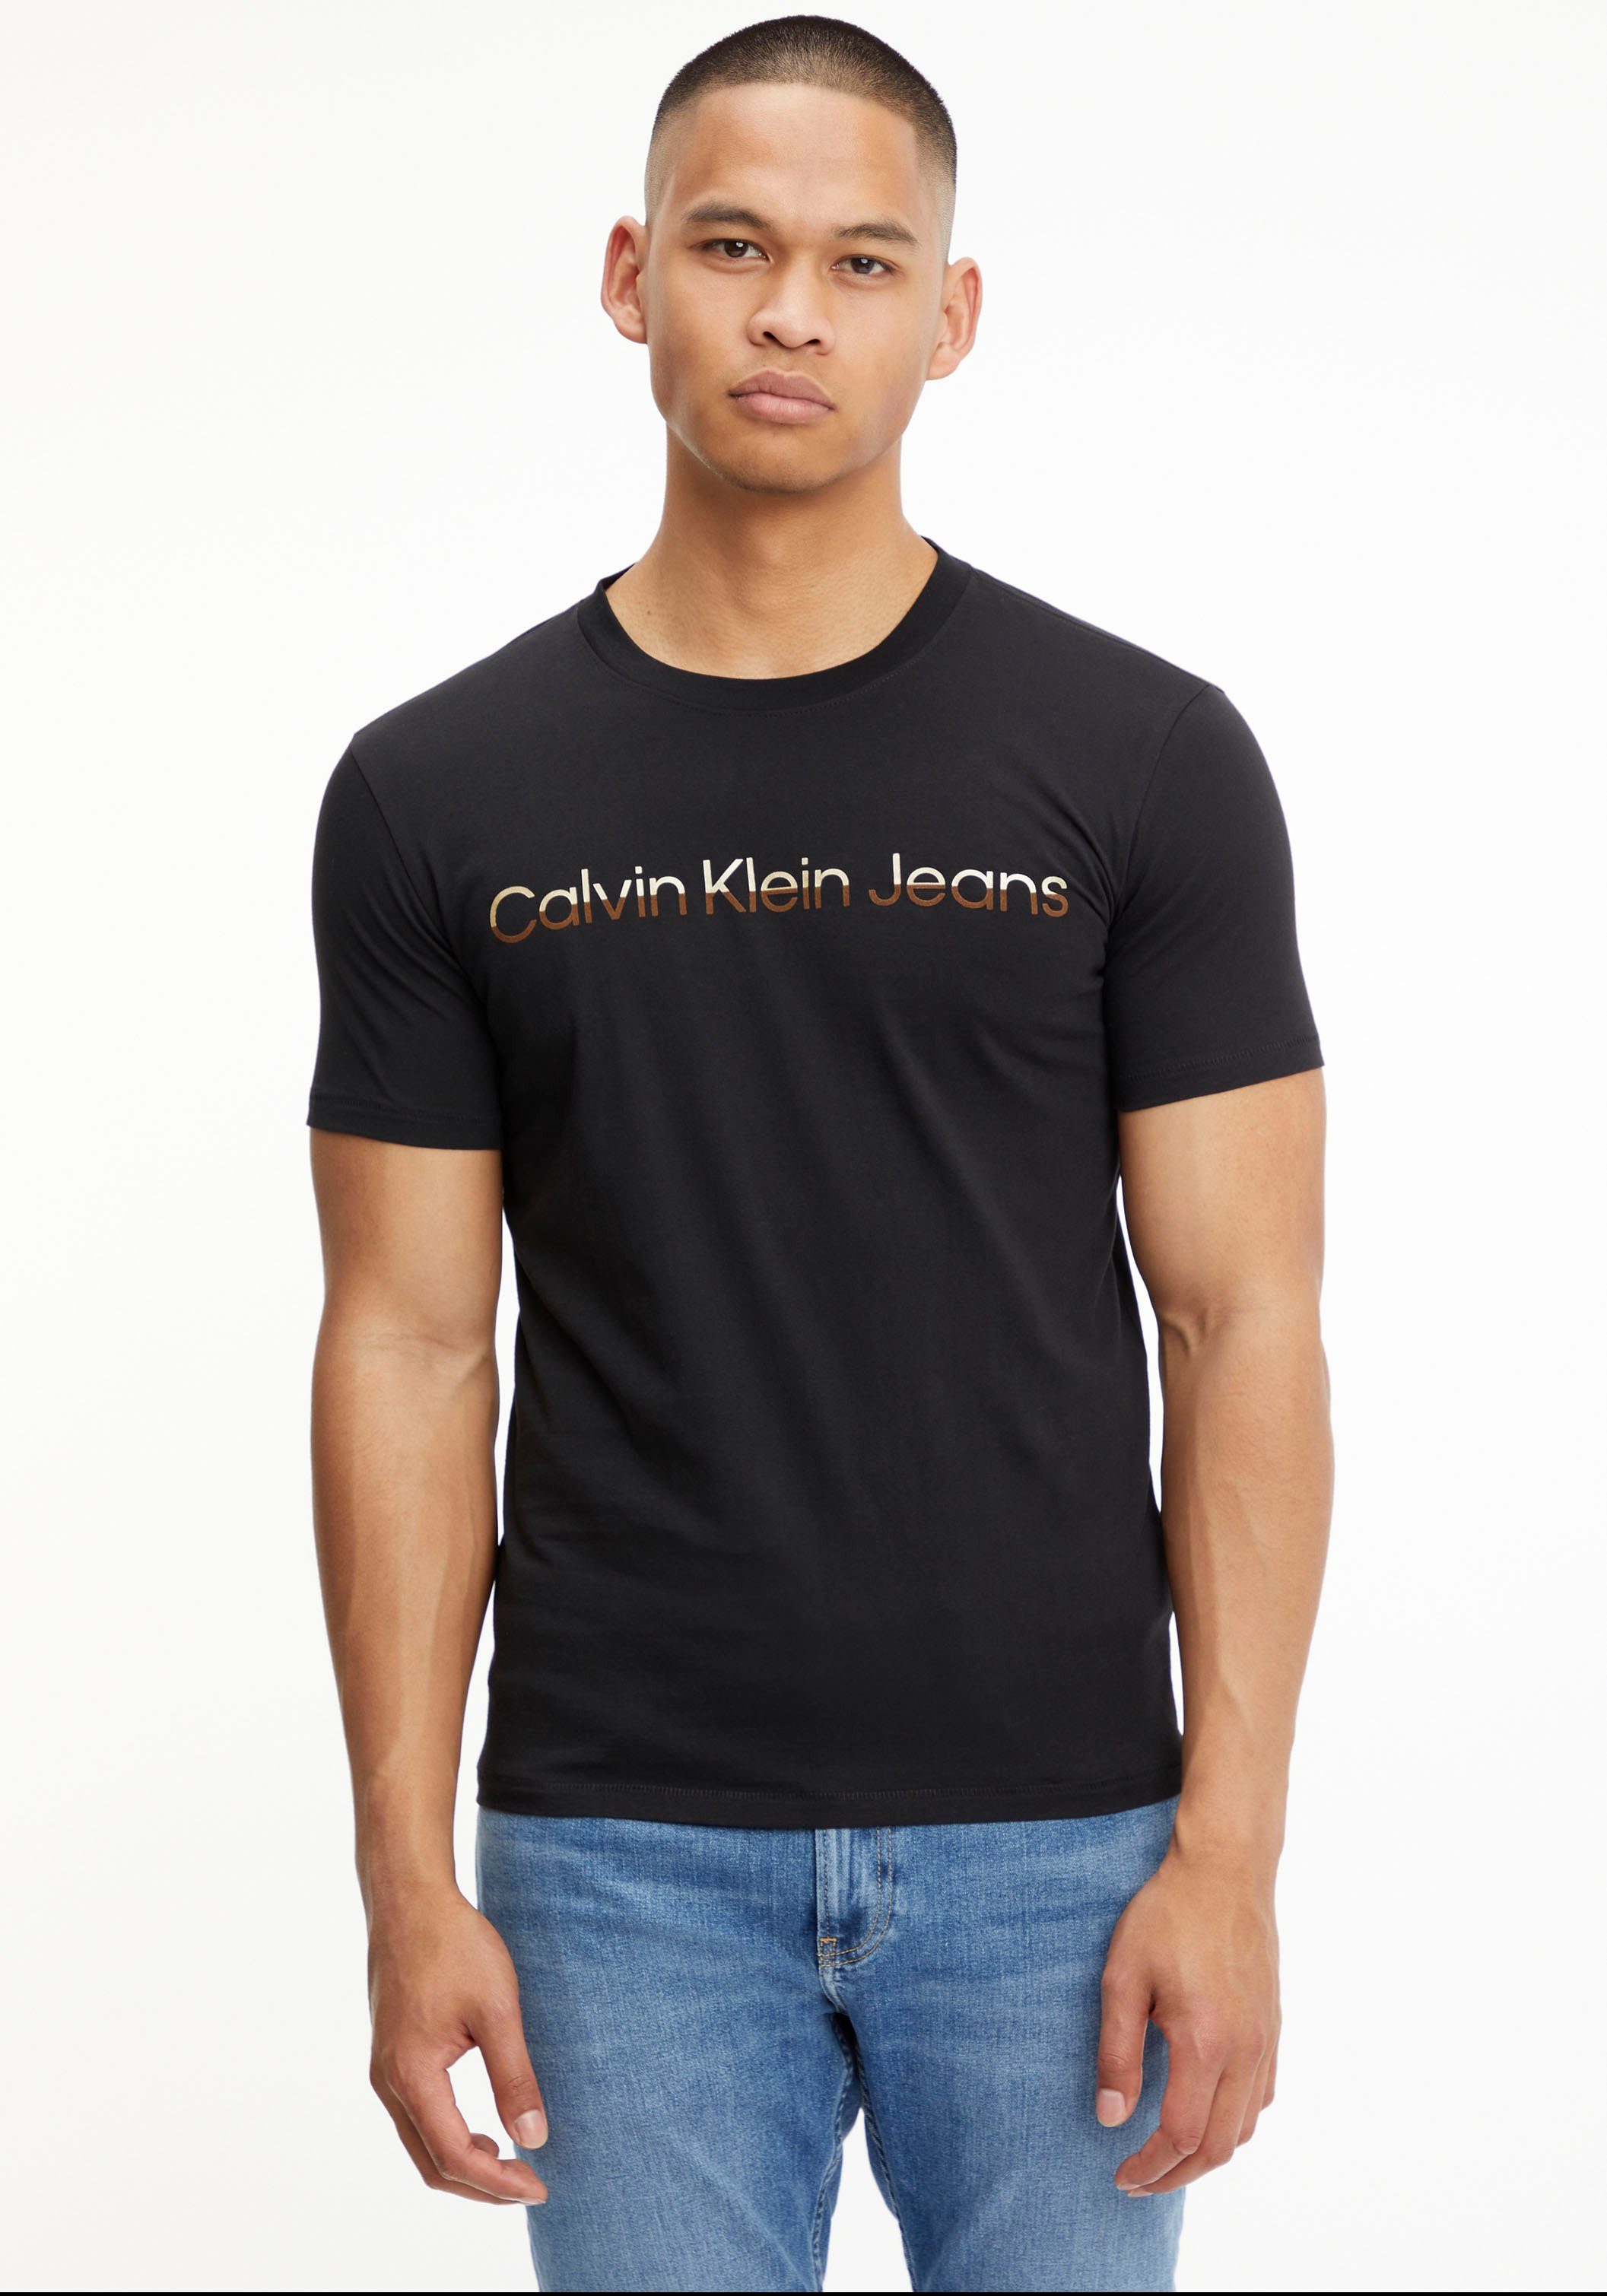 Calvin Klein Jeans T-Shirt Shirt MIXED INSTITUTIONA mit Calvin Klein Logoschriftzug schwarz